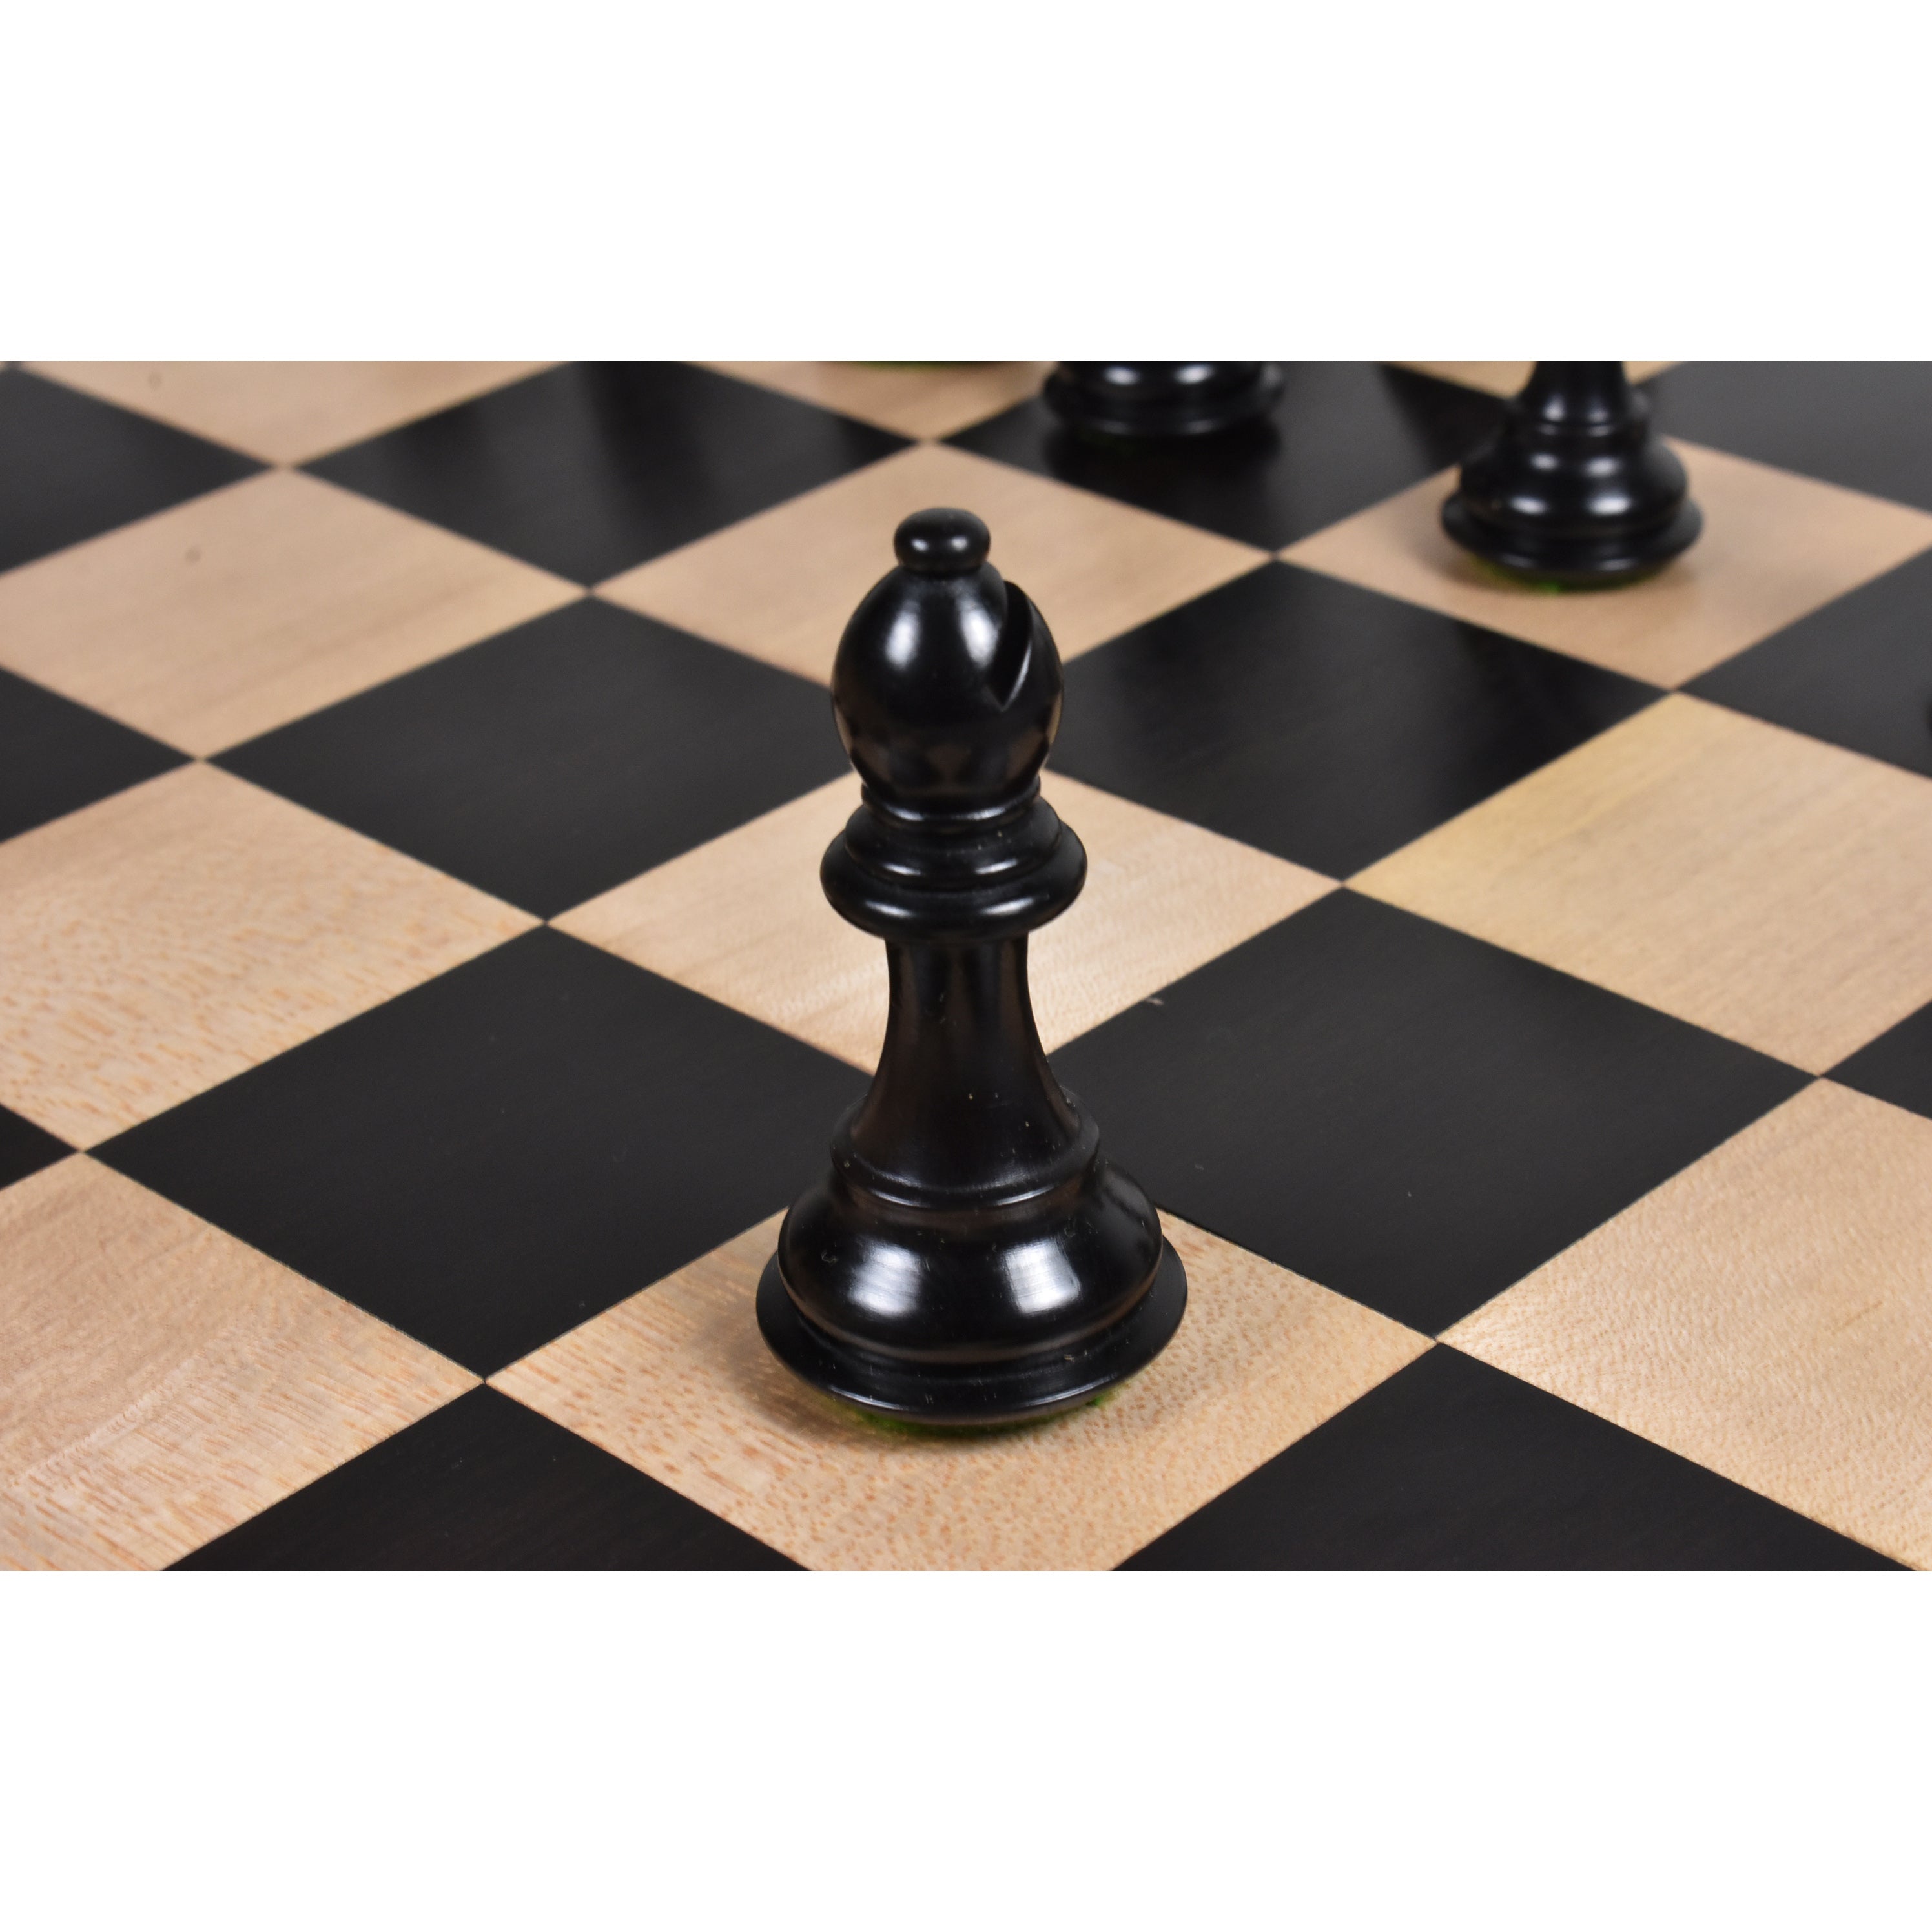 Fierce Knight Staunton Chess Pieces Only set